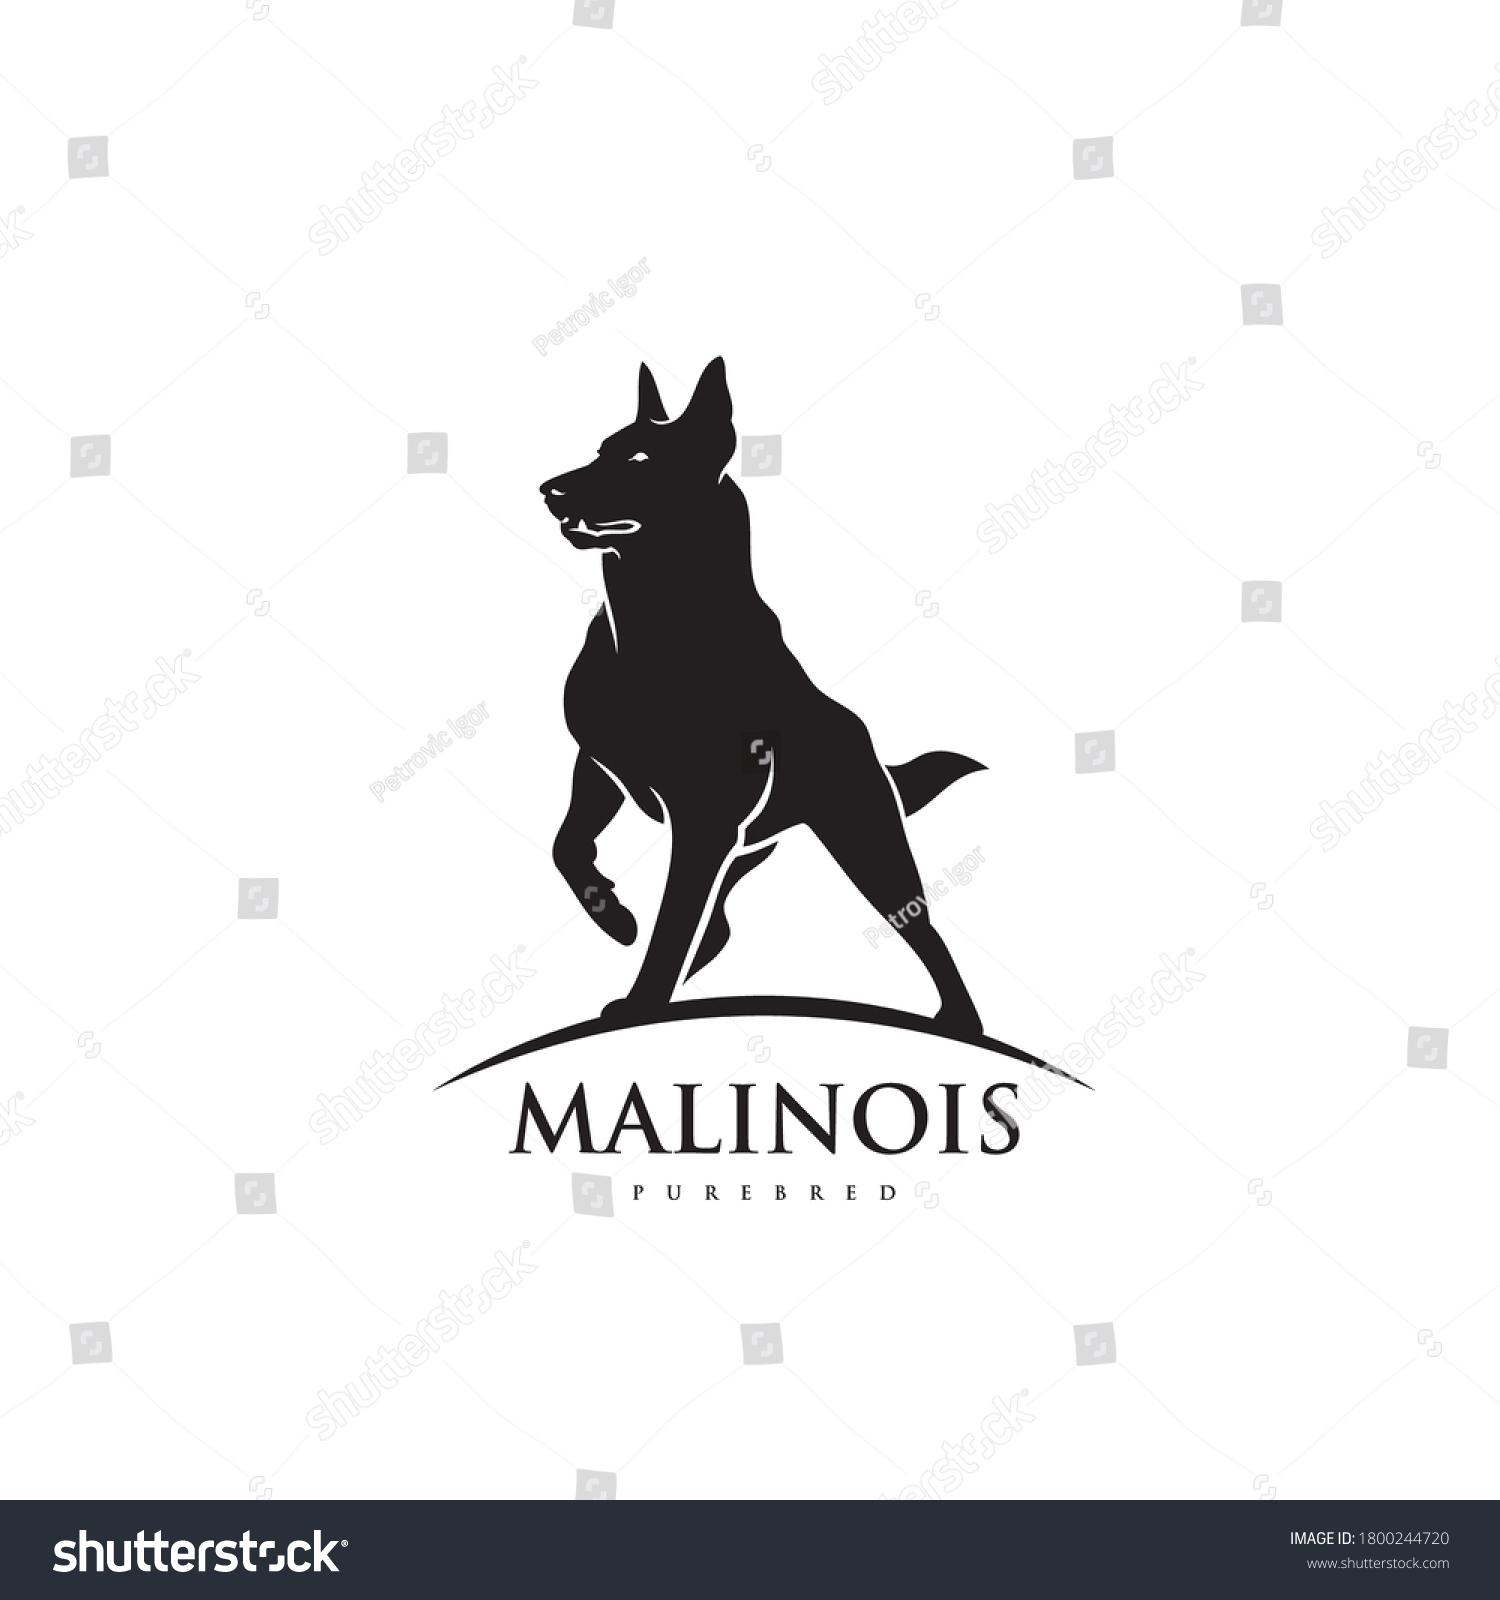 SVG of Belgian shepherd dog Malinois - isolated vector illustration svg